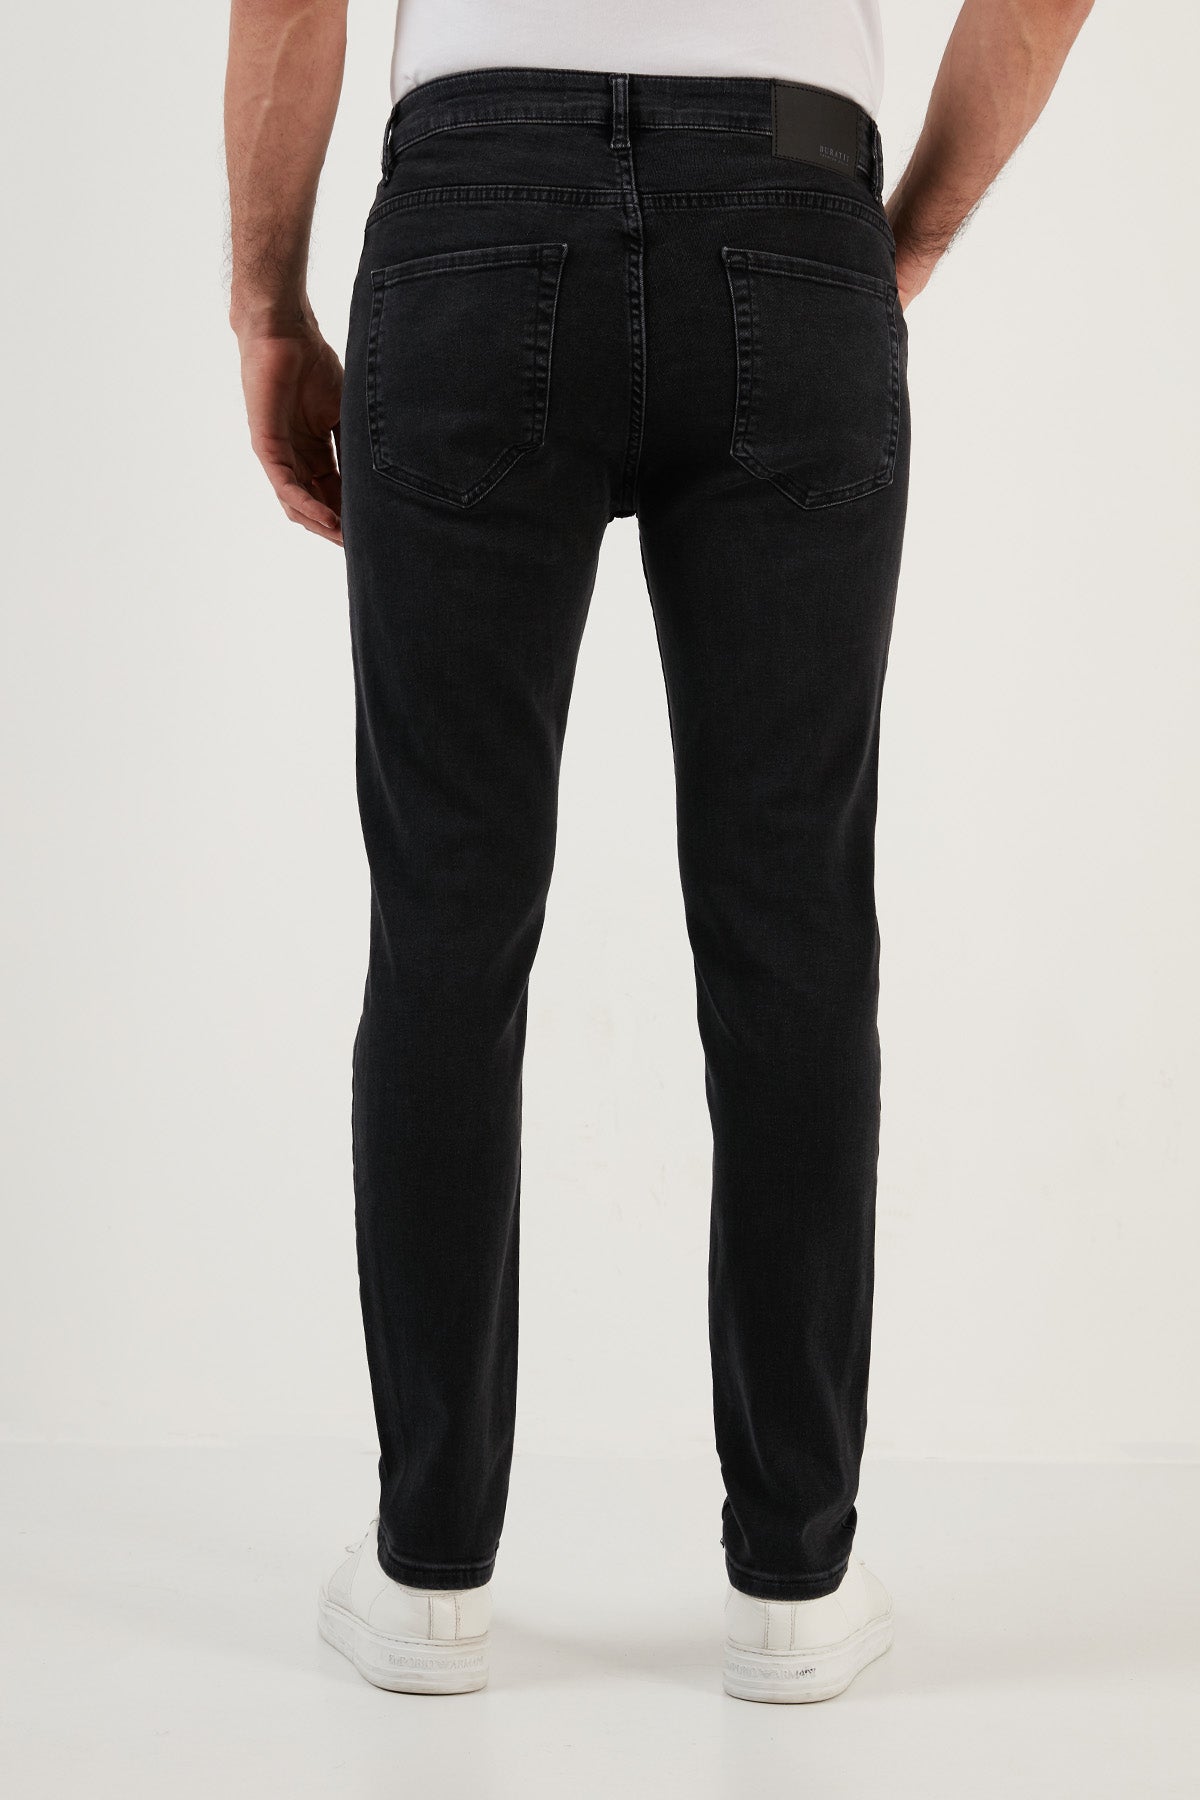 Buratti Cotton High Waist Slim Fit Slim Fit Jeans Men Denim Trousers - BLACK